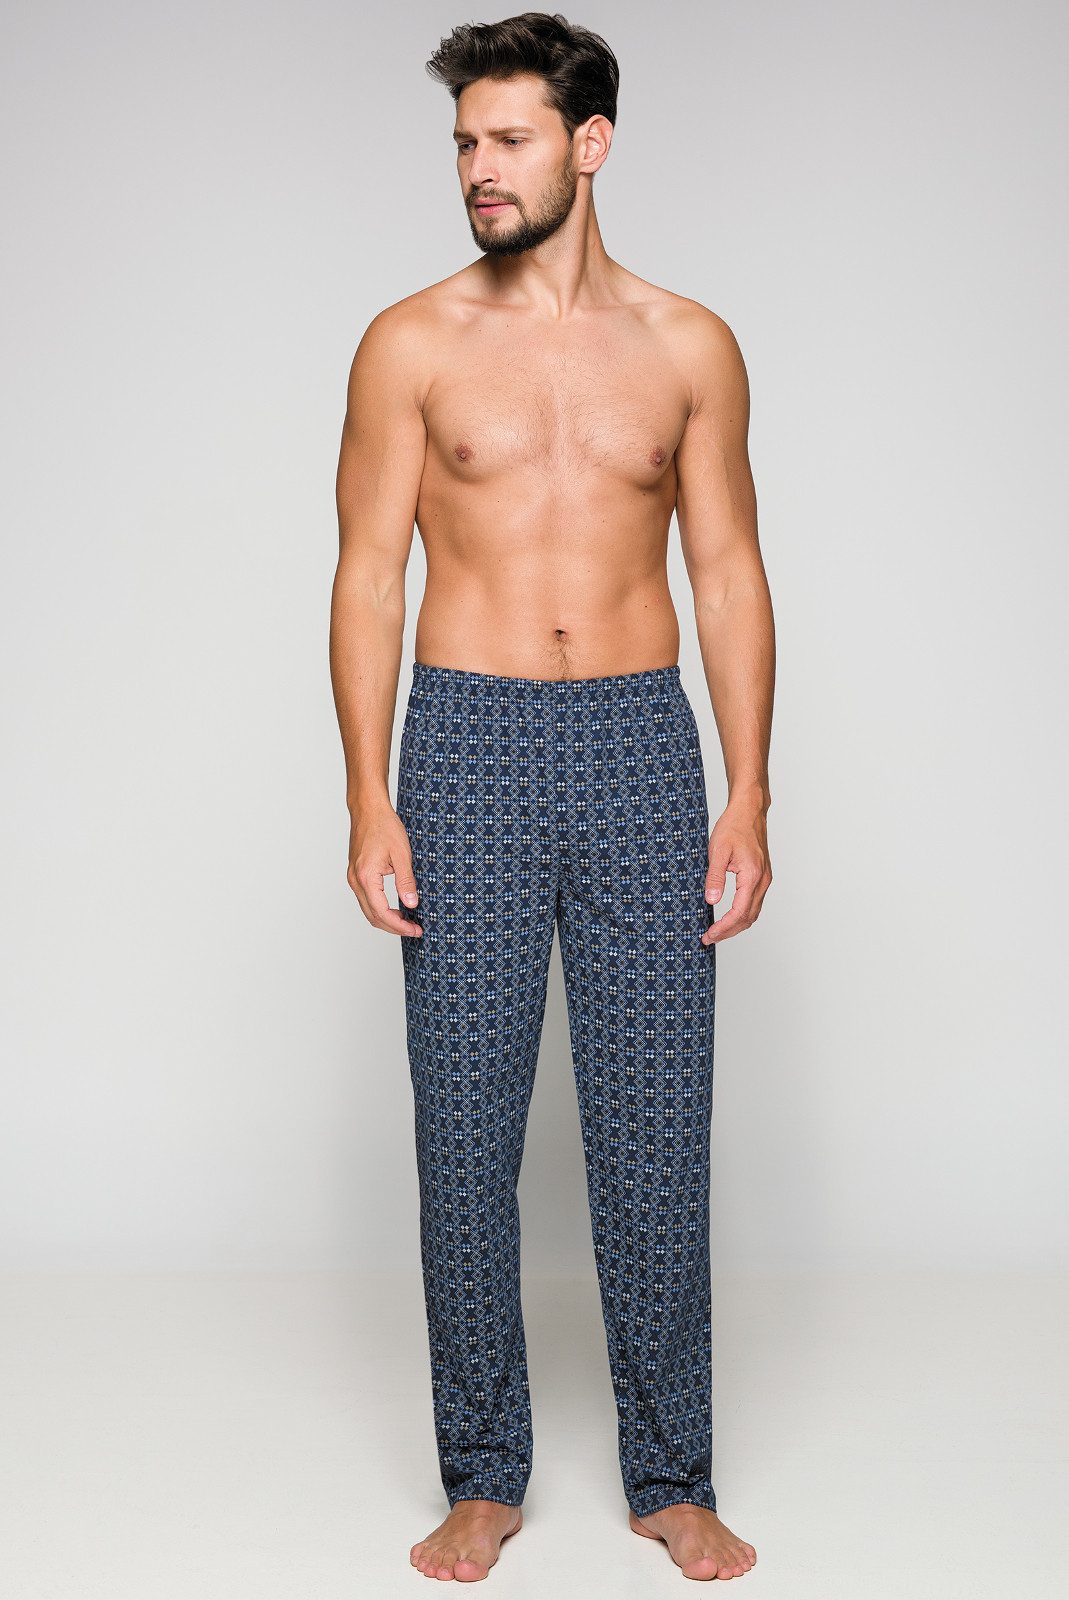 Pánské pyžamové kalhoty Regina 721 MIX XL